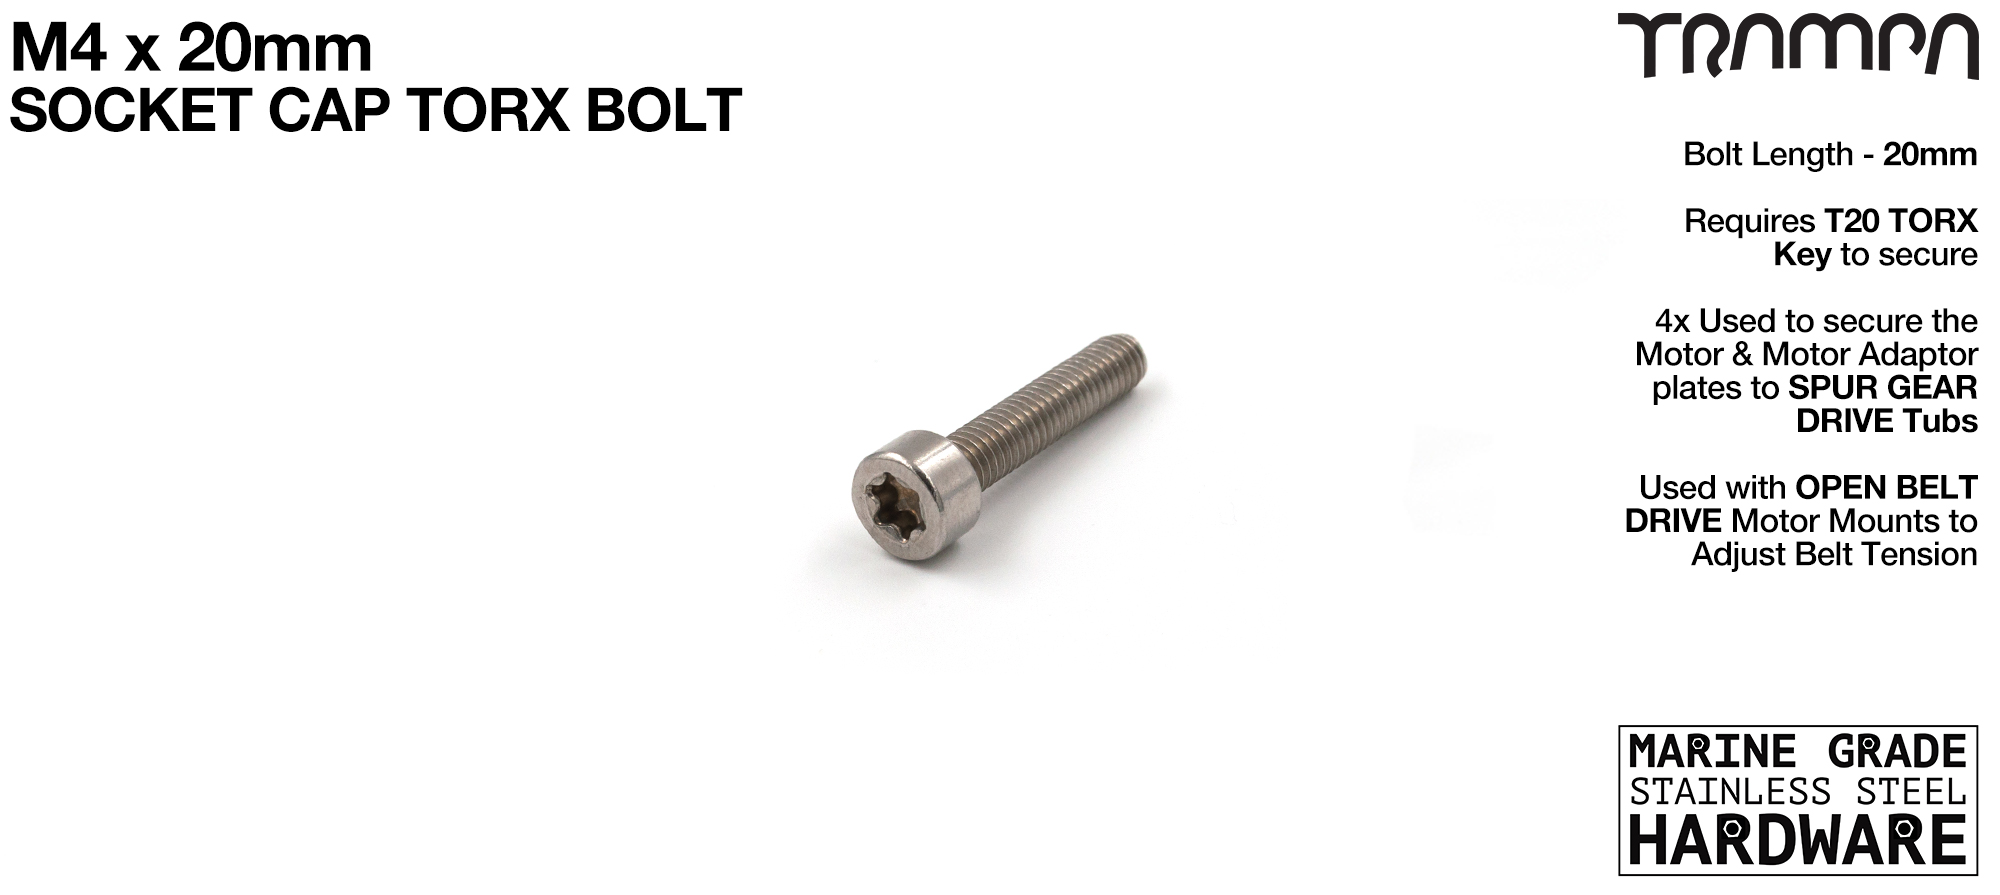 M4 x 20mm Socket Capped Head TORX Bolt ISO 4762 Marine Grade Stainless Steel 